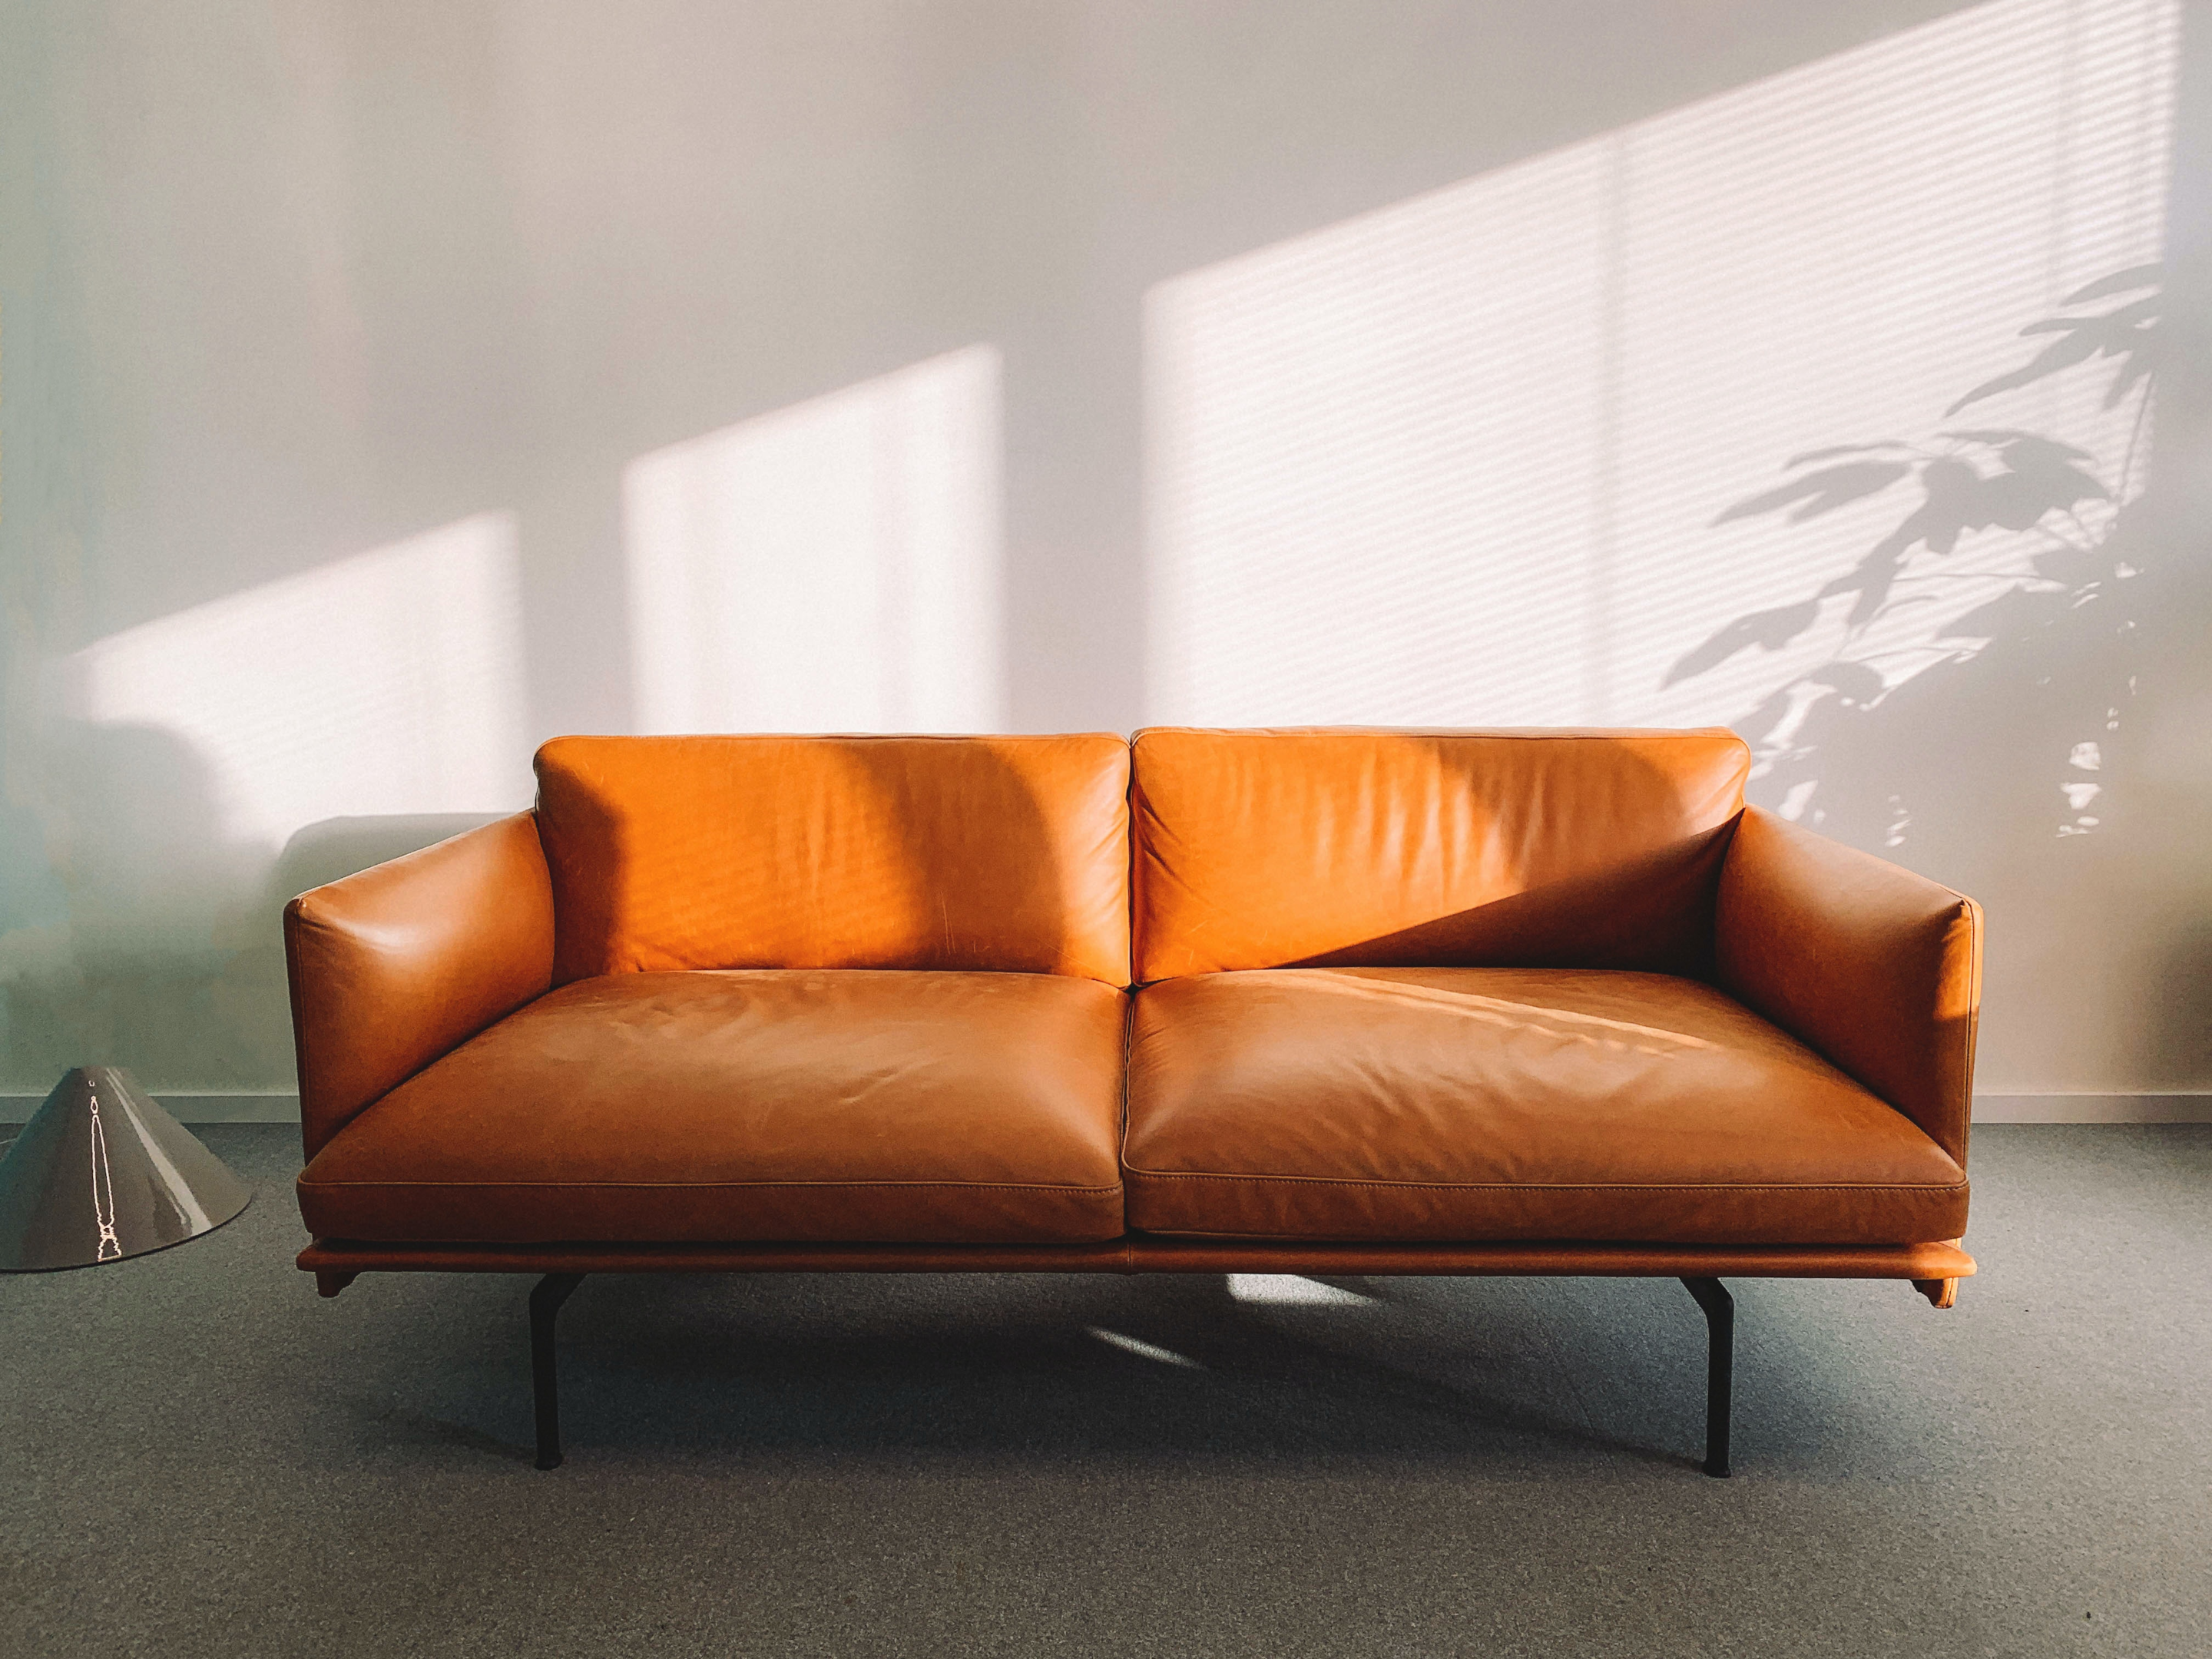 https://www.pexels.com/photo/2-seat-orange-leather-sofa-beside-wall-1866149/